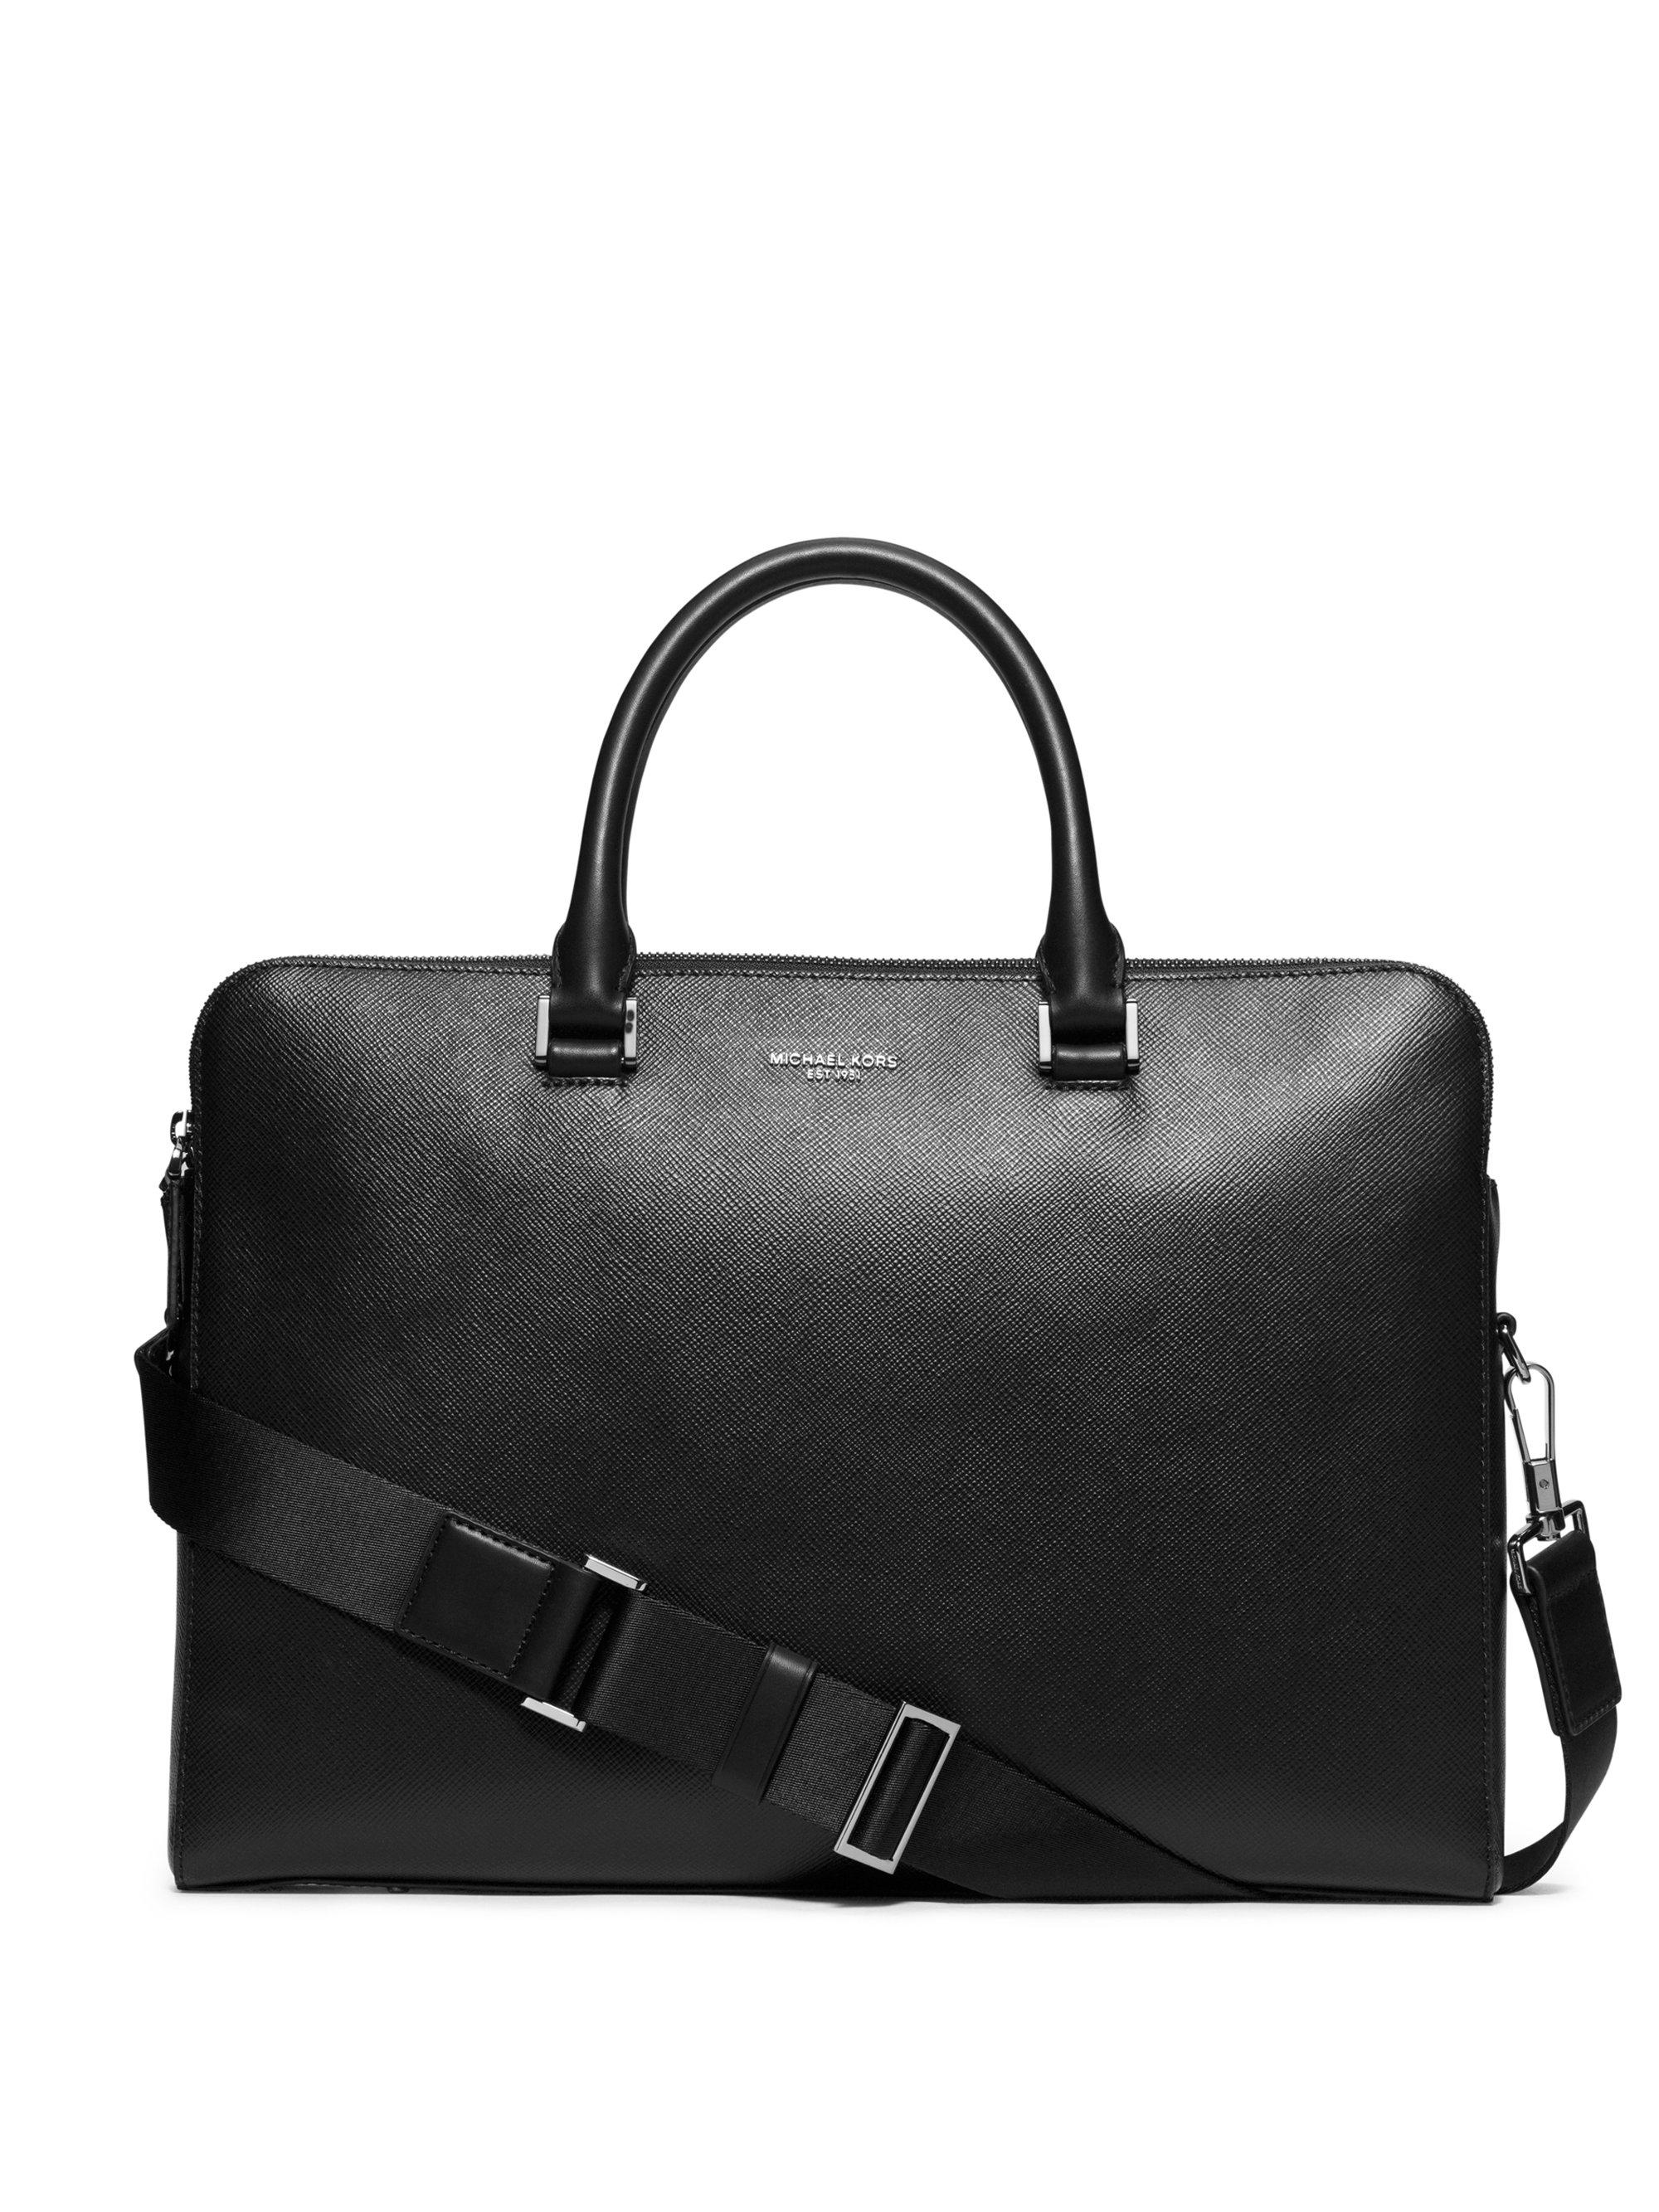 Lyst - Michael Kors Cross-grain Leather Double-zip Briefcase in Black ...